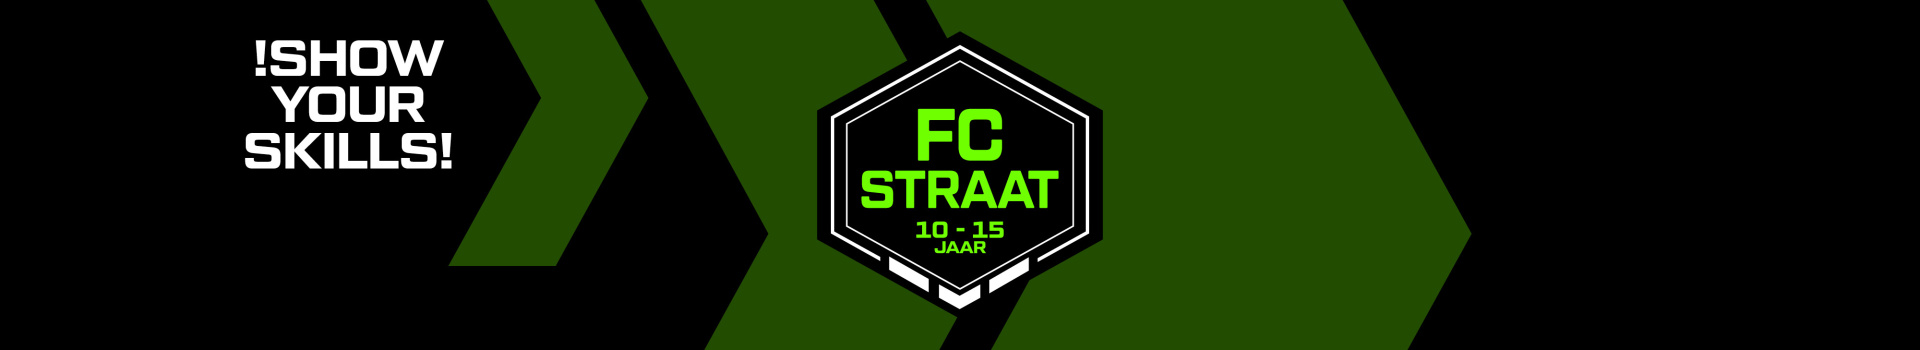 Header FC STRAAT 2.jpg